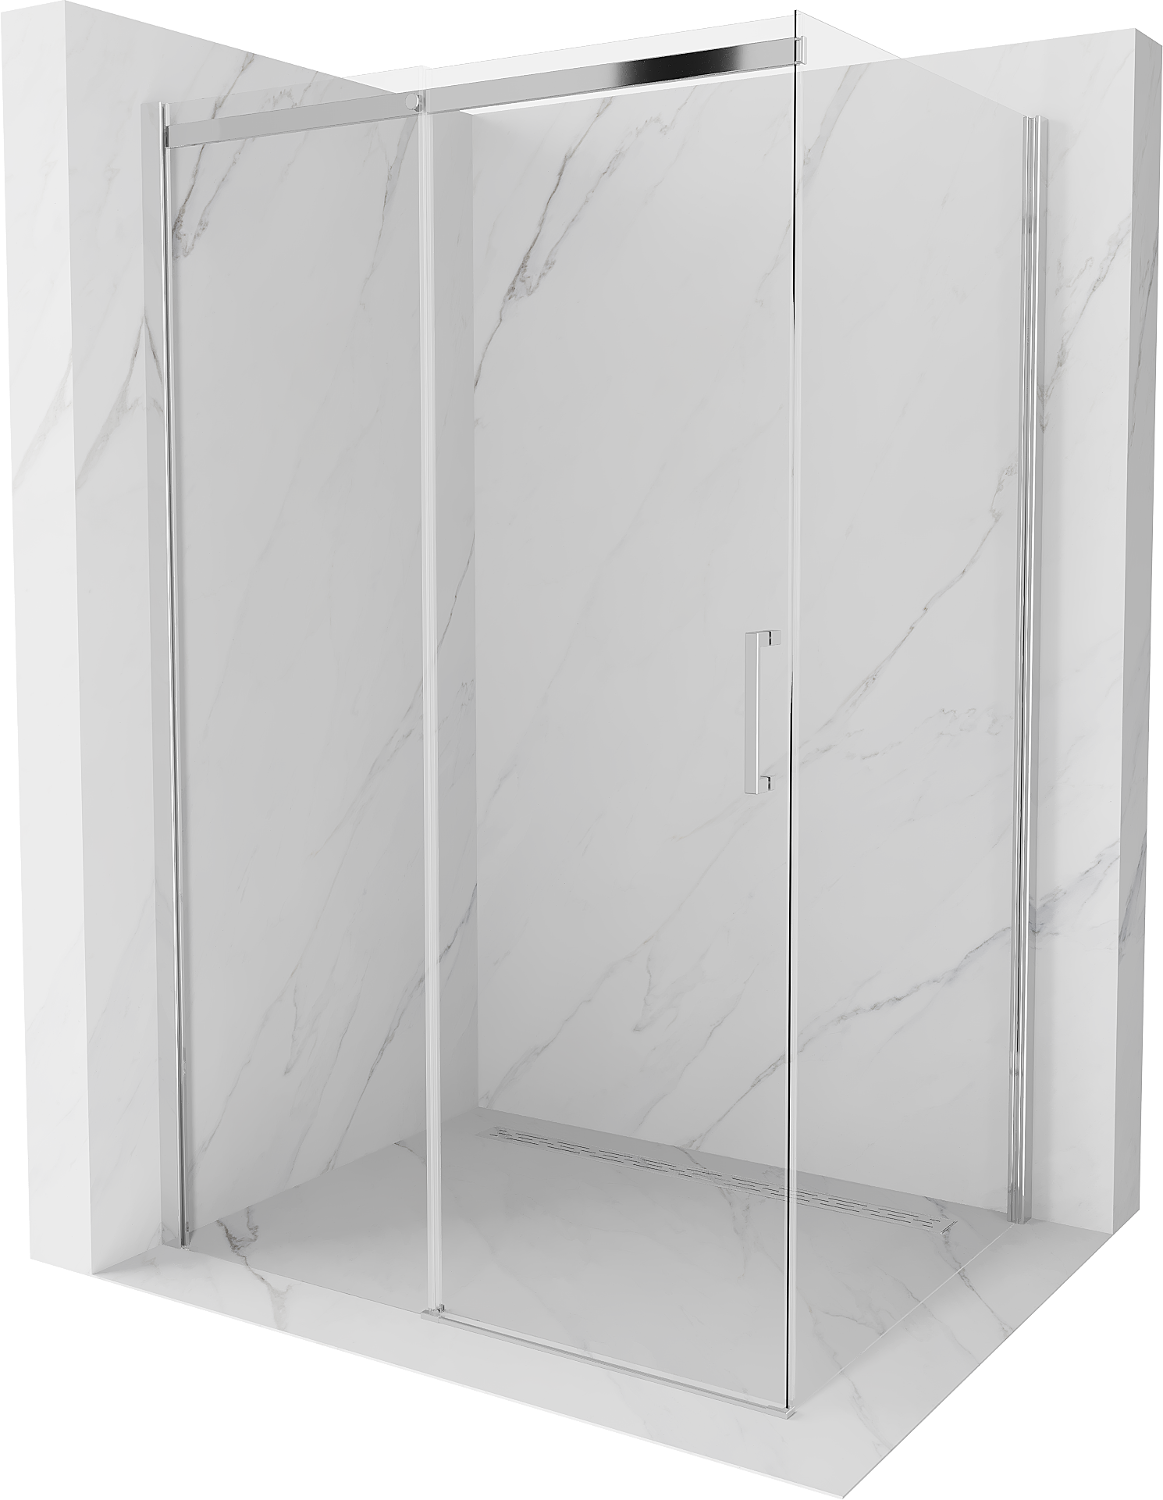 Mexen Omega kabina prysznicowa rozsuwana 160 x 100 cm, transparent, chrom - 825-160-100-01-00